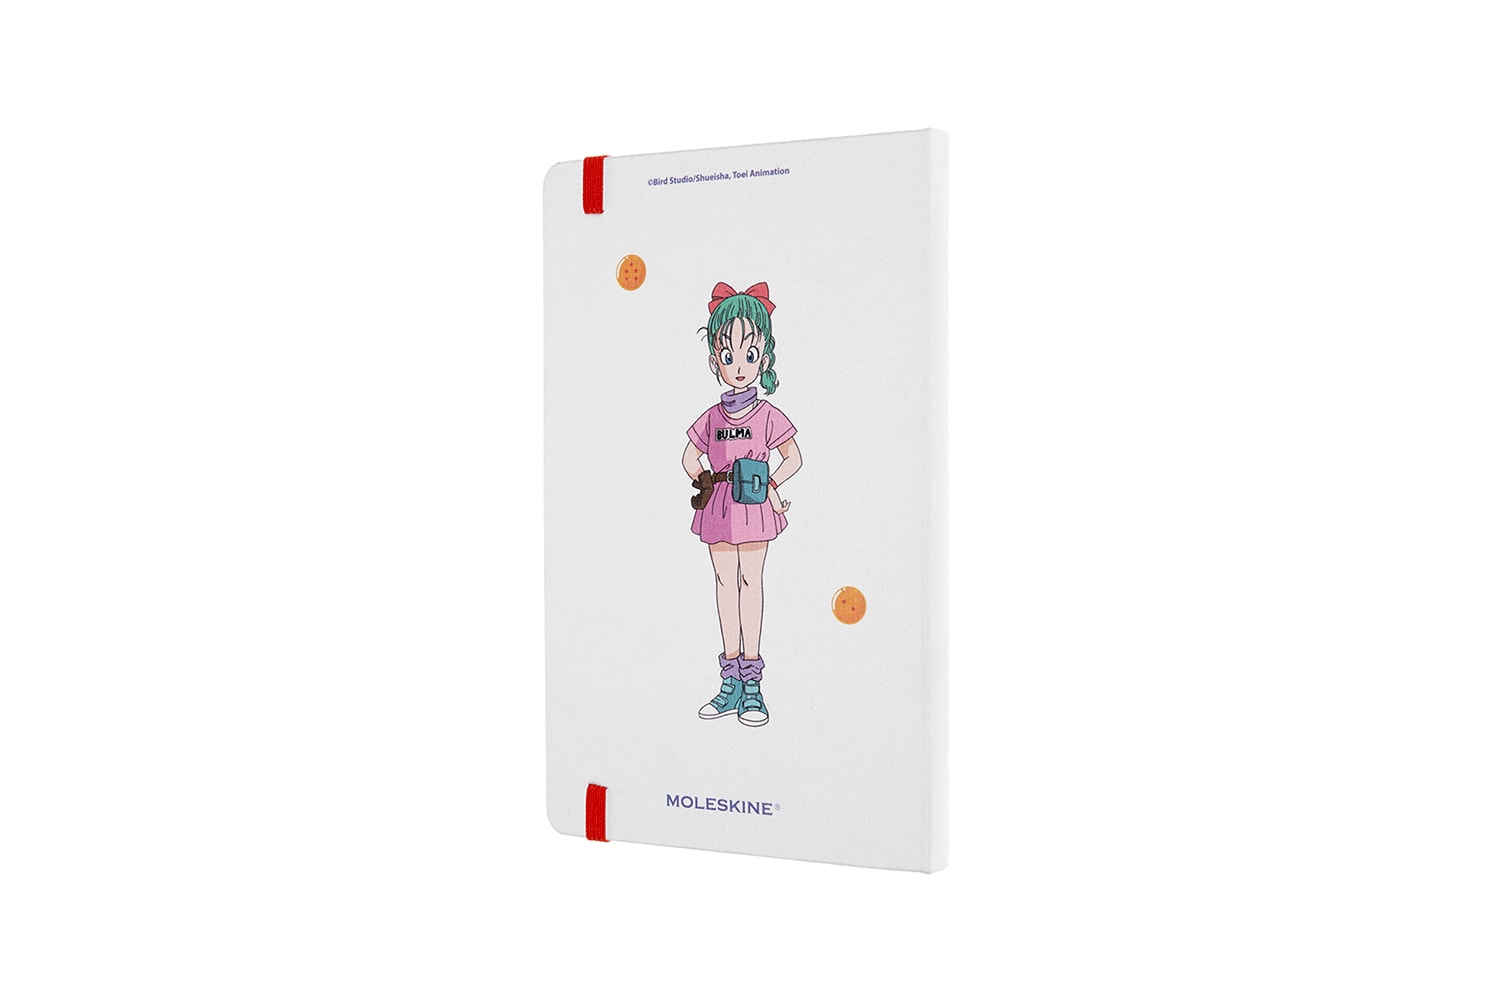 Moleskine Dragon Ball Notebook Release books Master Roshi Bulma Goku Chi-Chi 